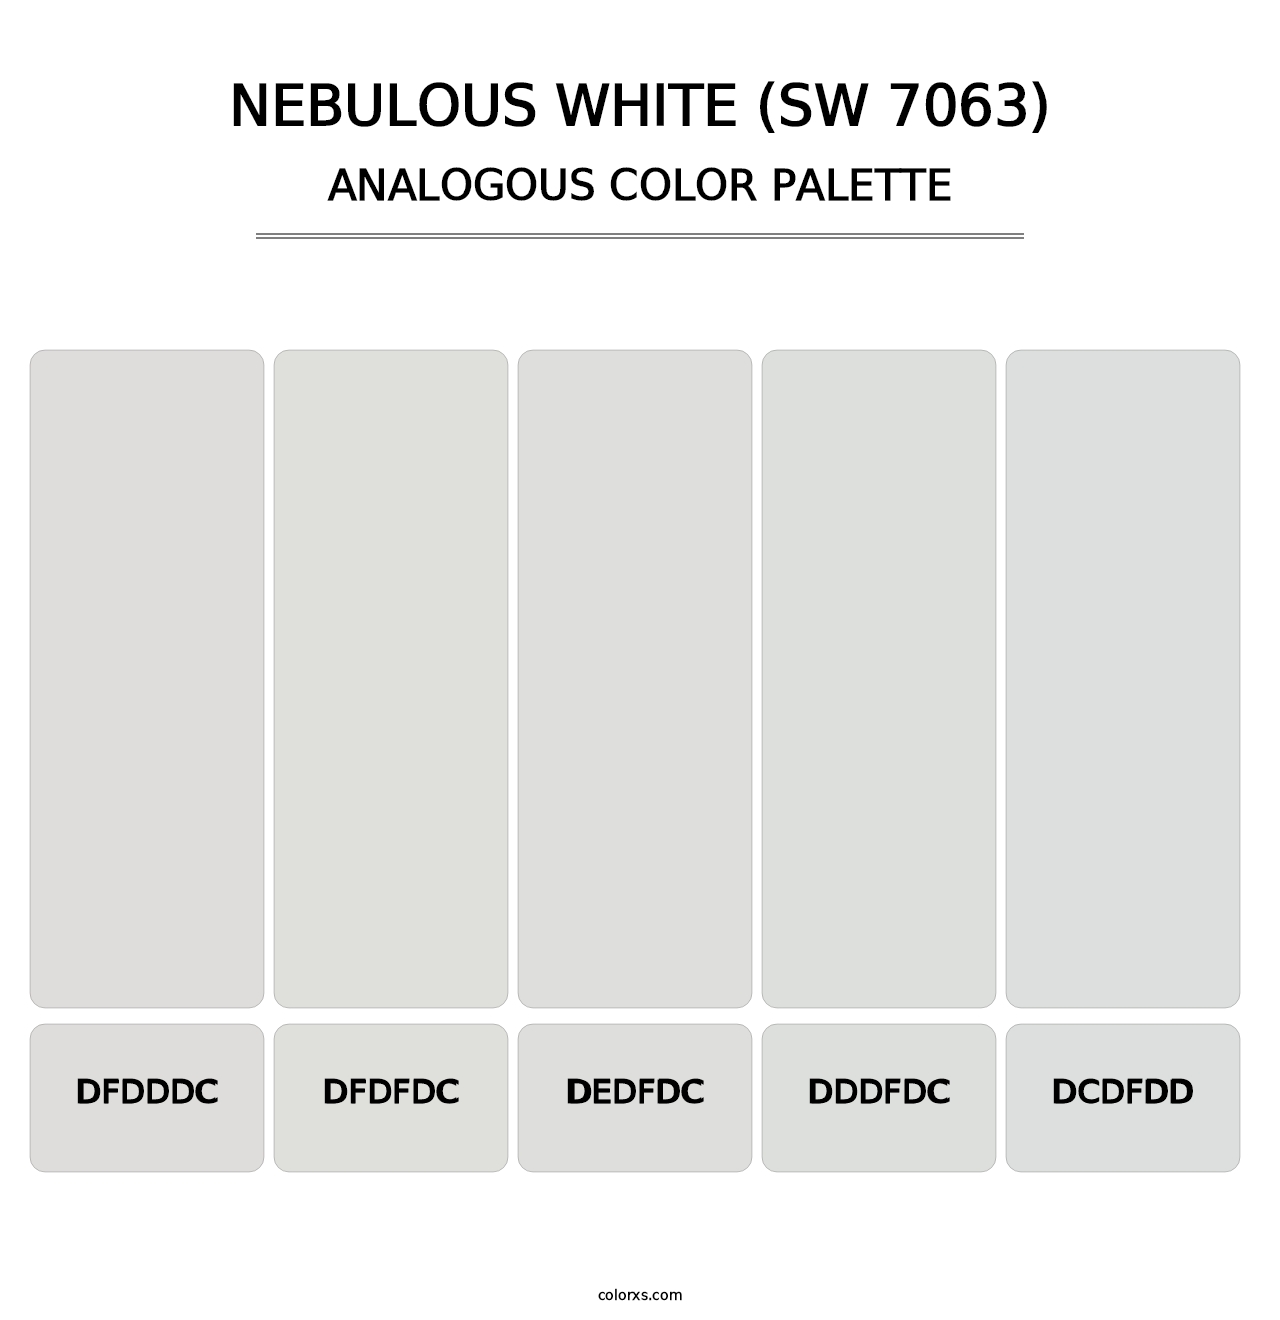 Nebulous White (SW 7063) - Analogous Color Palette